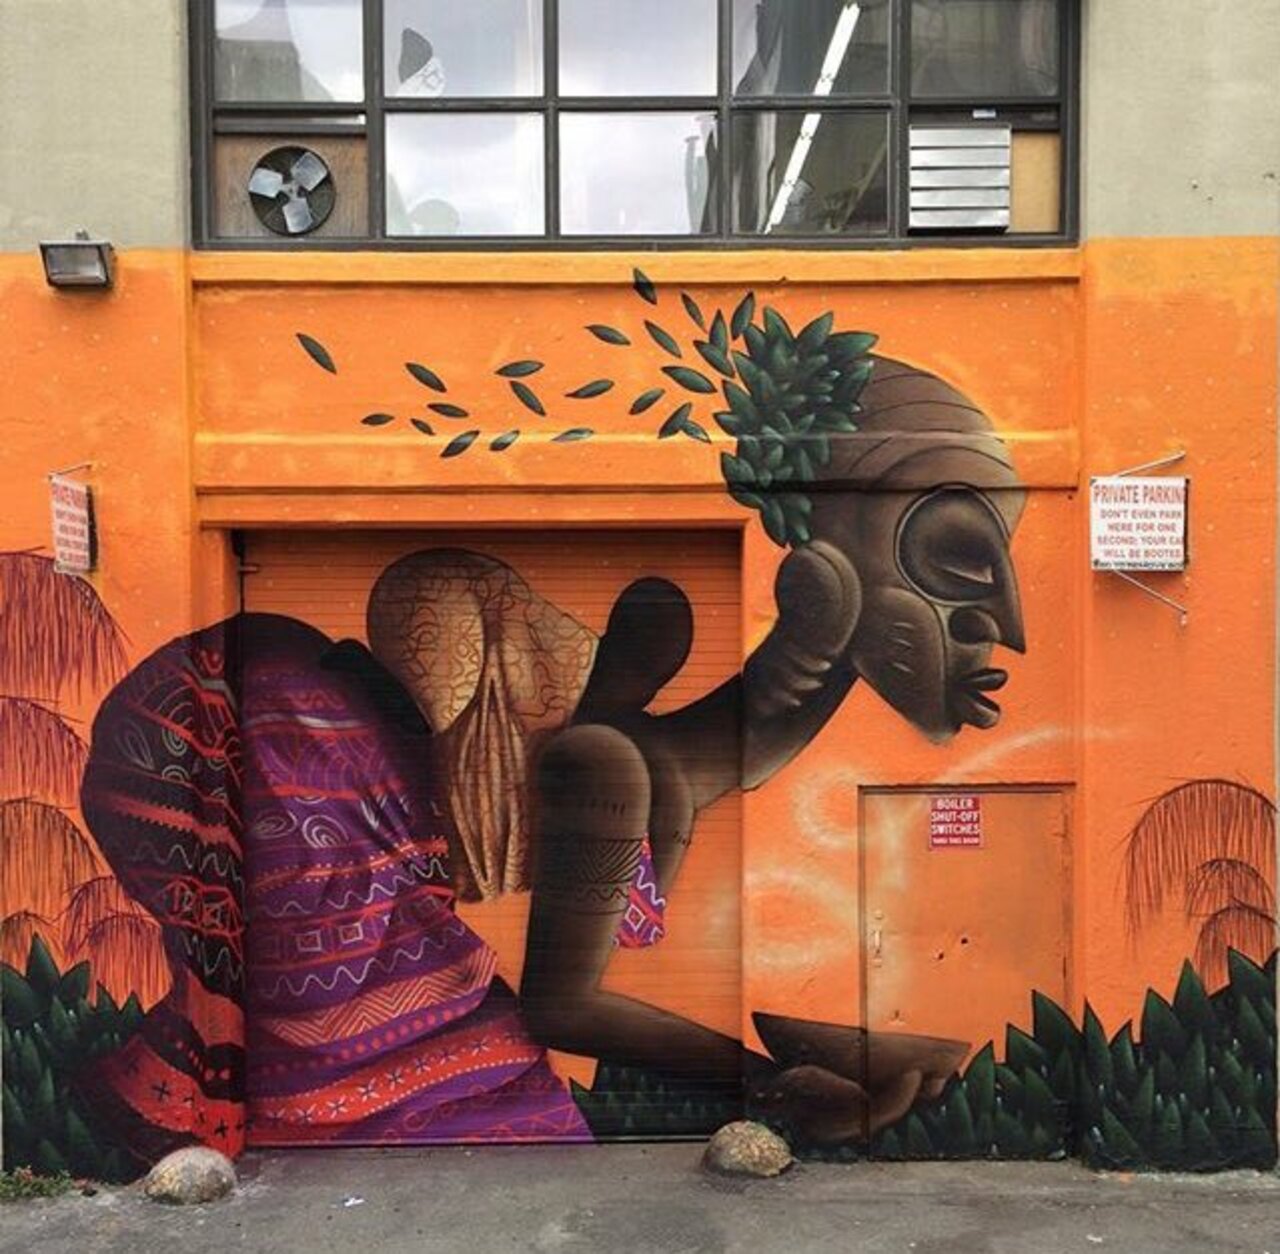 RT @CryptocrawlLV: New Street Art by Alexandre Keto in NYC 

#art #graffiti #mural #streetart https://t.co/JqbJIyhbGh http://cur.lv/qp6mi